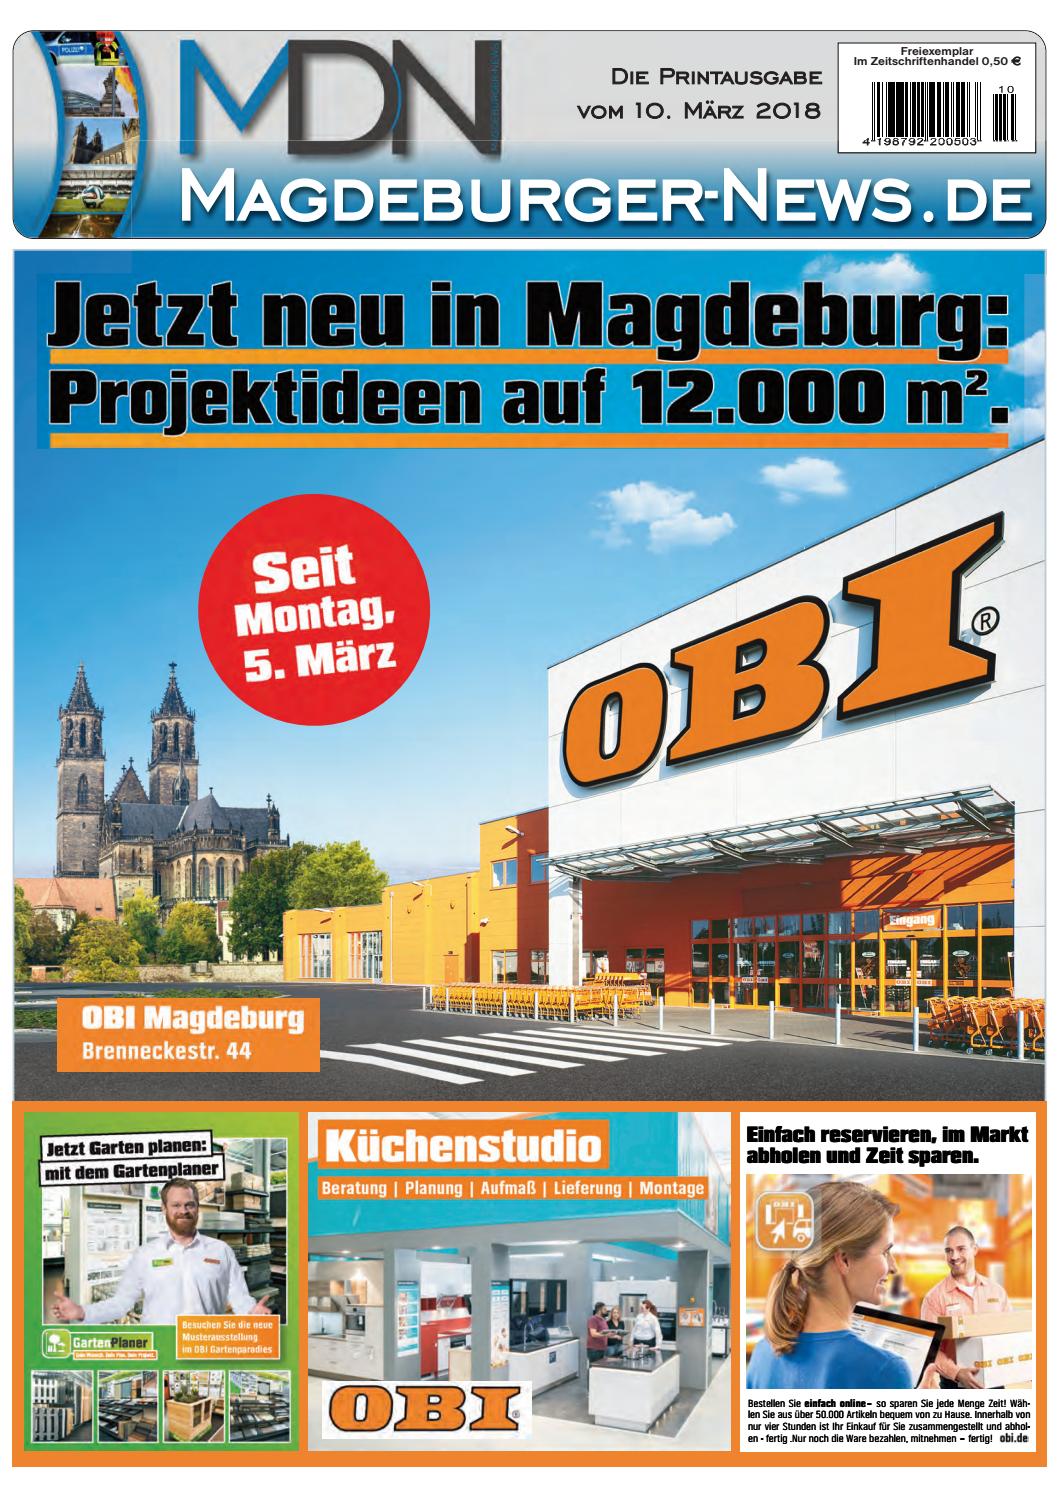 Gartenplaner Online Best Of Magdeburger News De by Mdnews18 issuu